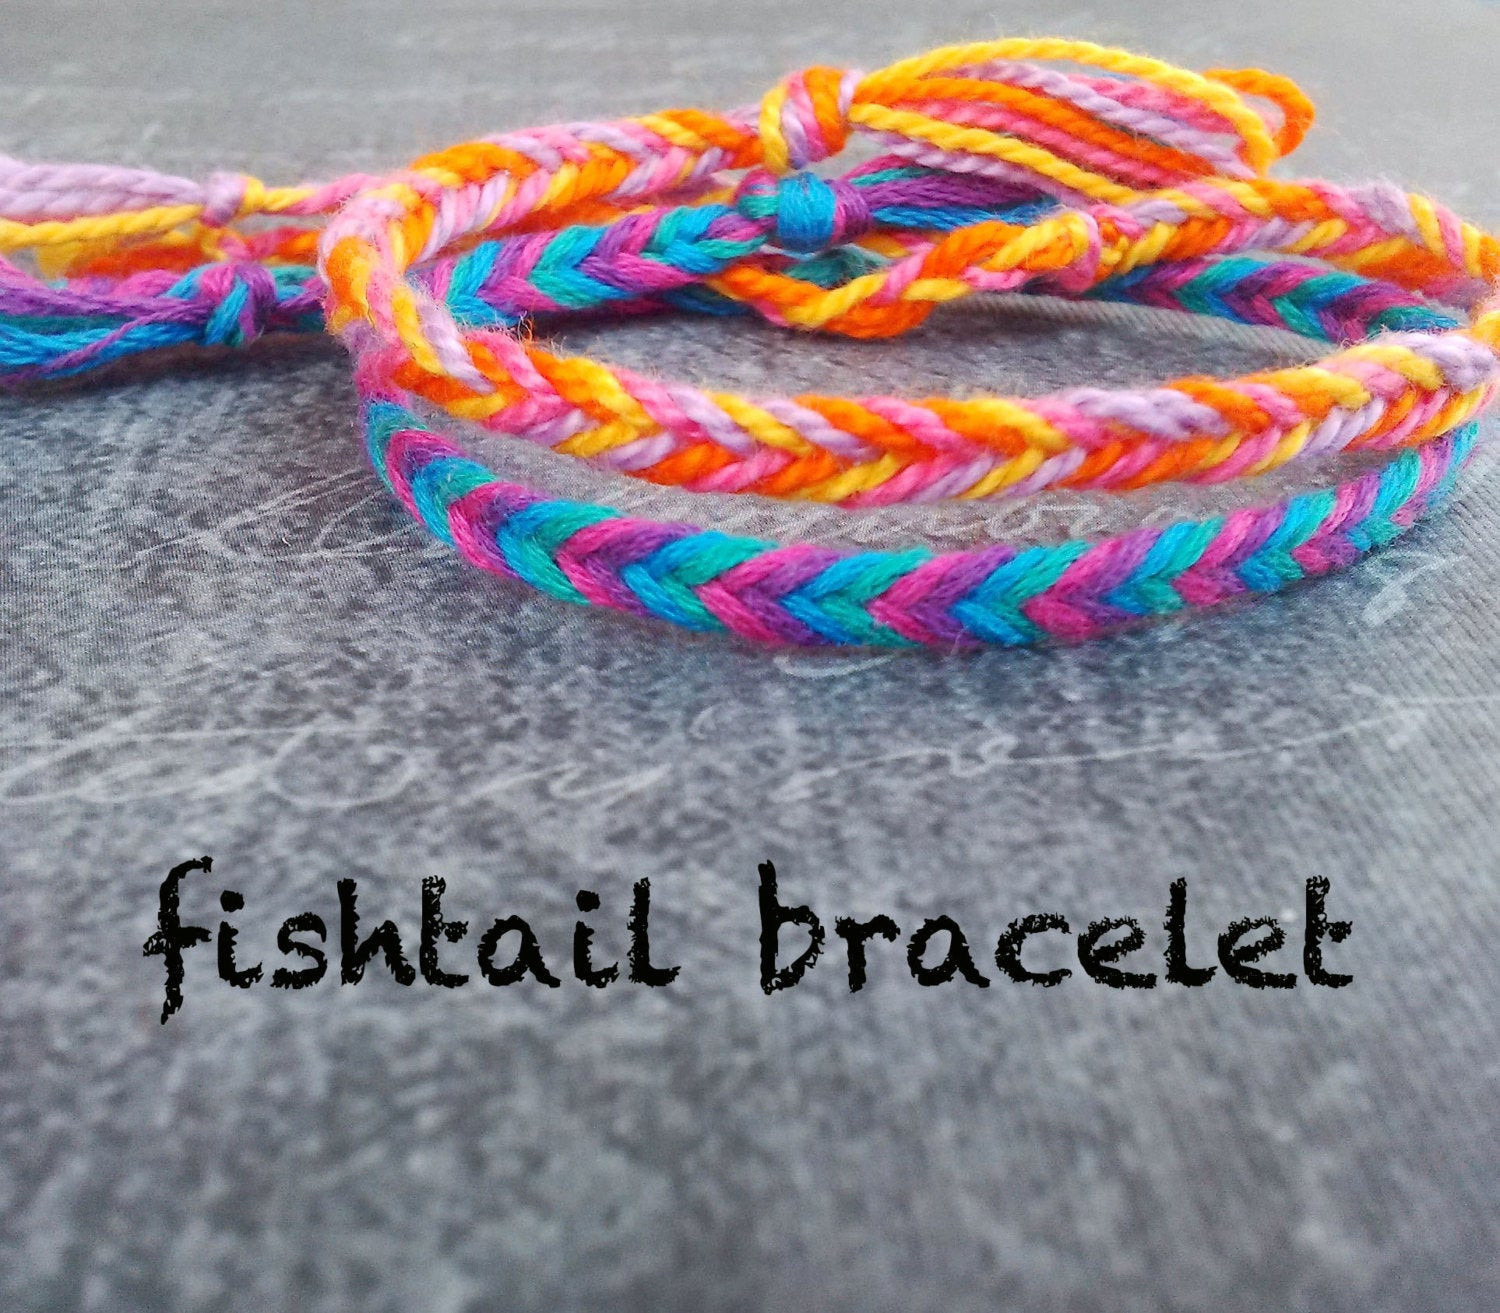 21 Best Fishtail Friendship Bracelet – Home, Family, Style and Art Ideas